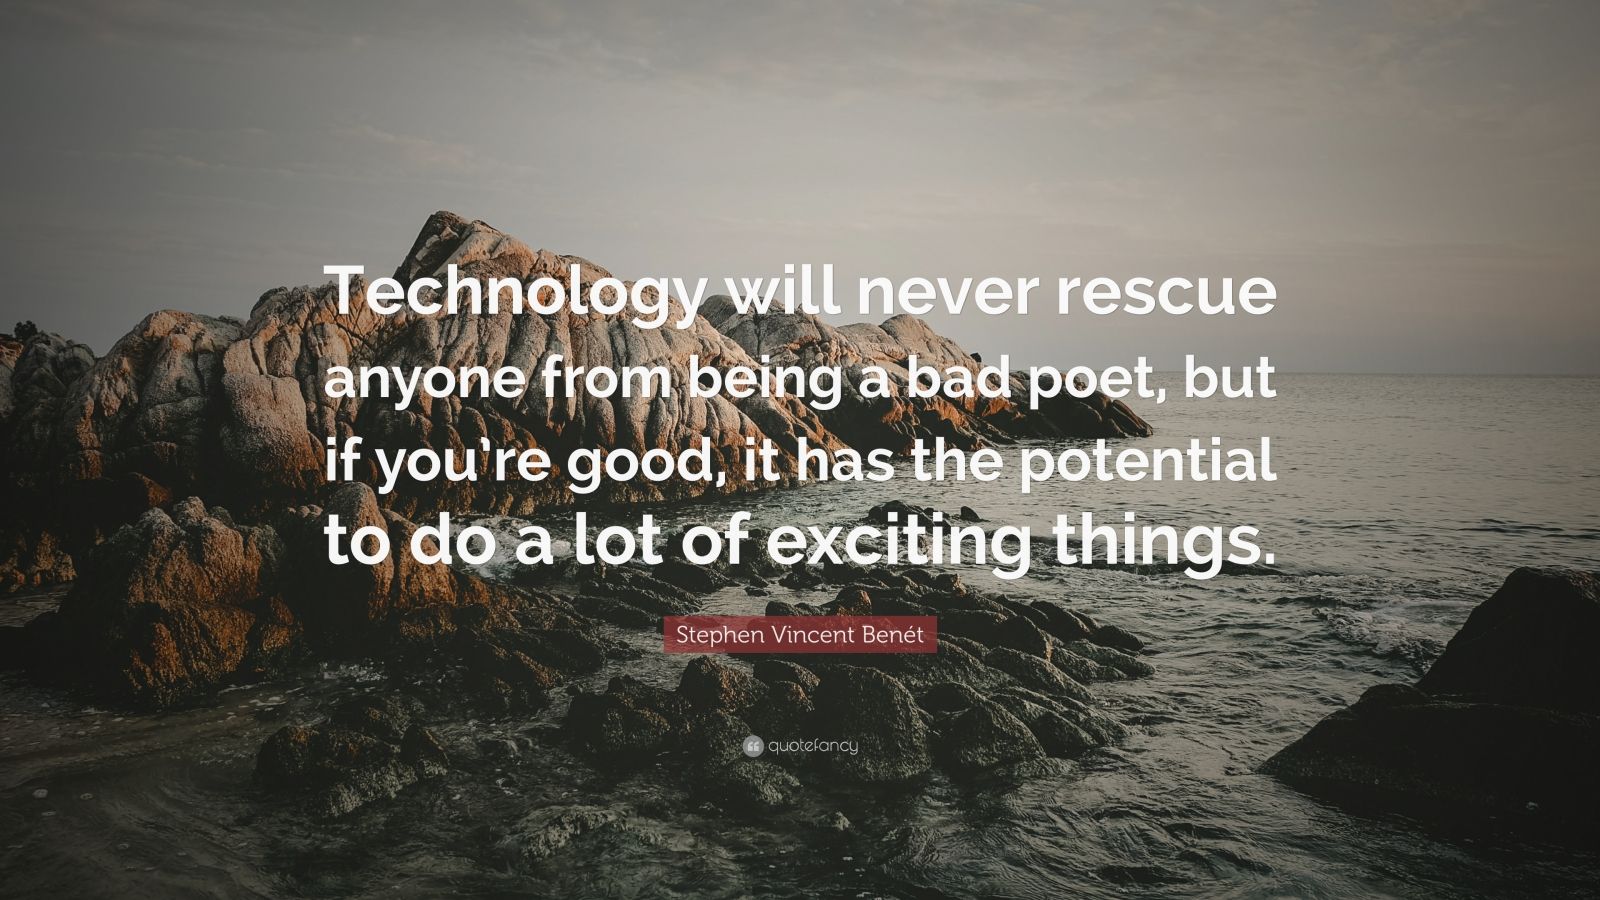 Stephen Vincent Benét Quote “Technology will never rescue